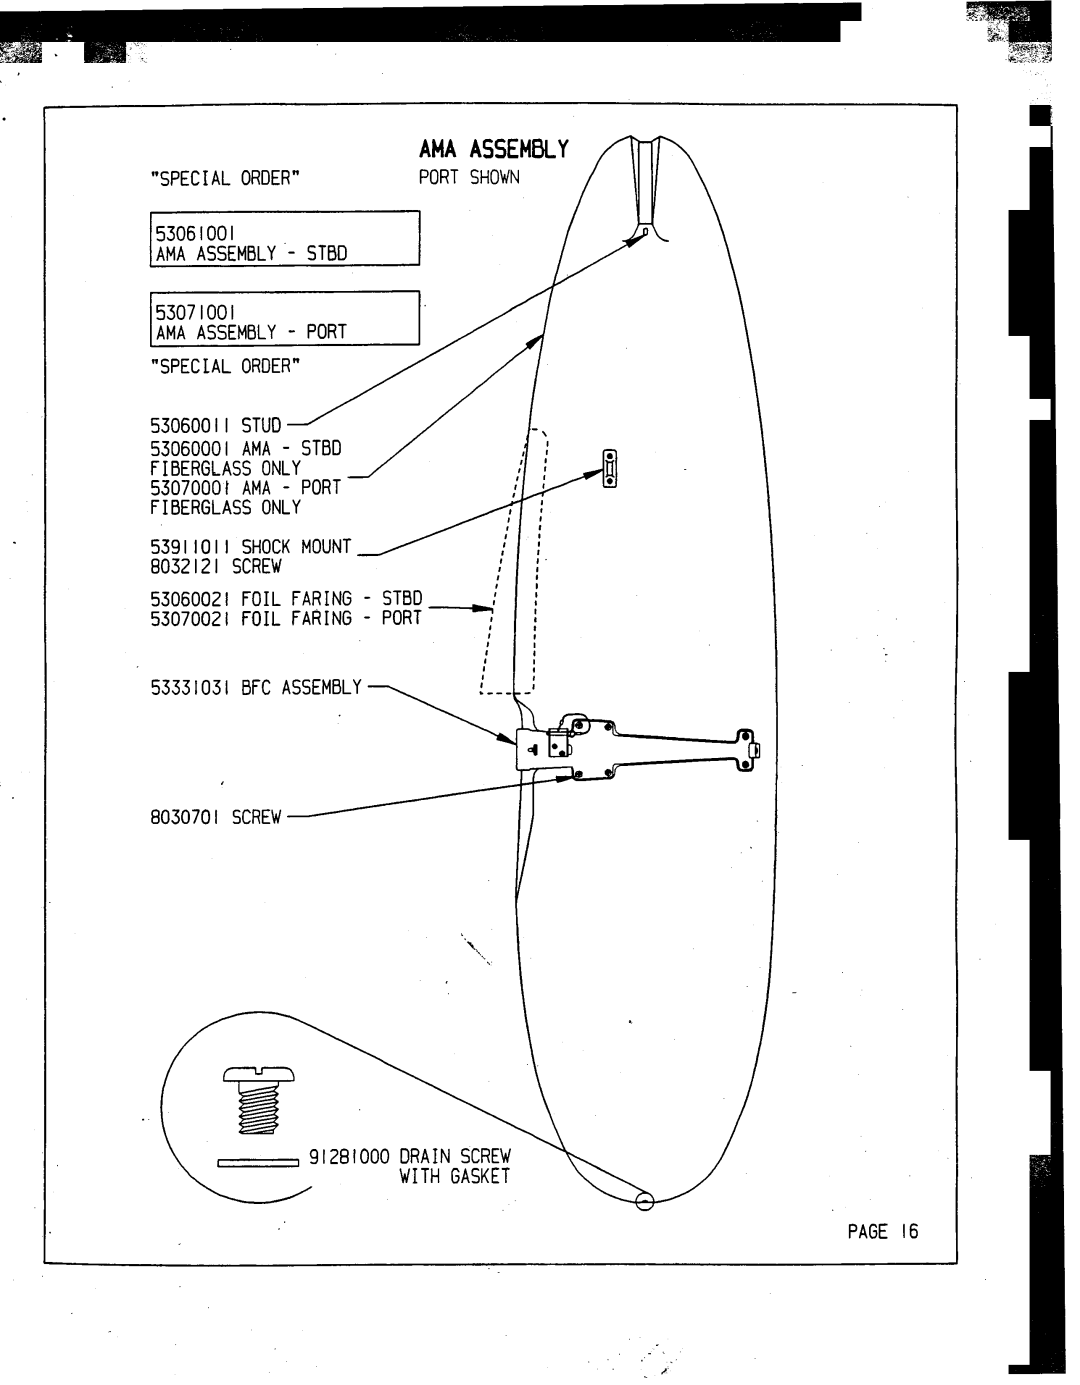 Hobie TriFoiler manual 15306I001, Iama-Assemblystbd, 153071001, 53911011, Shock Mount 